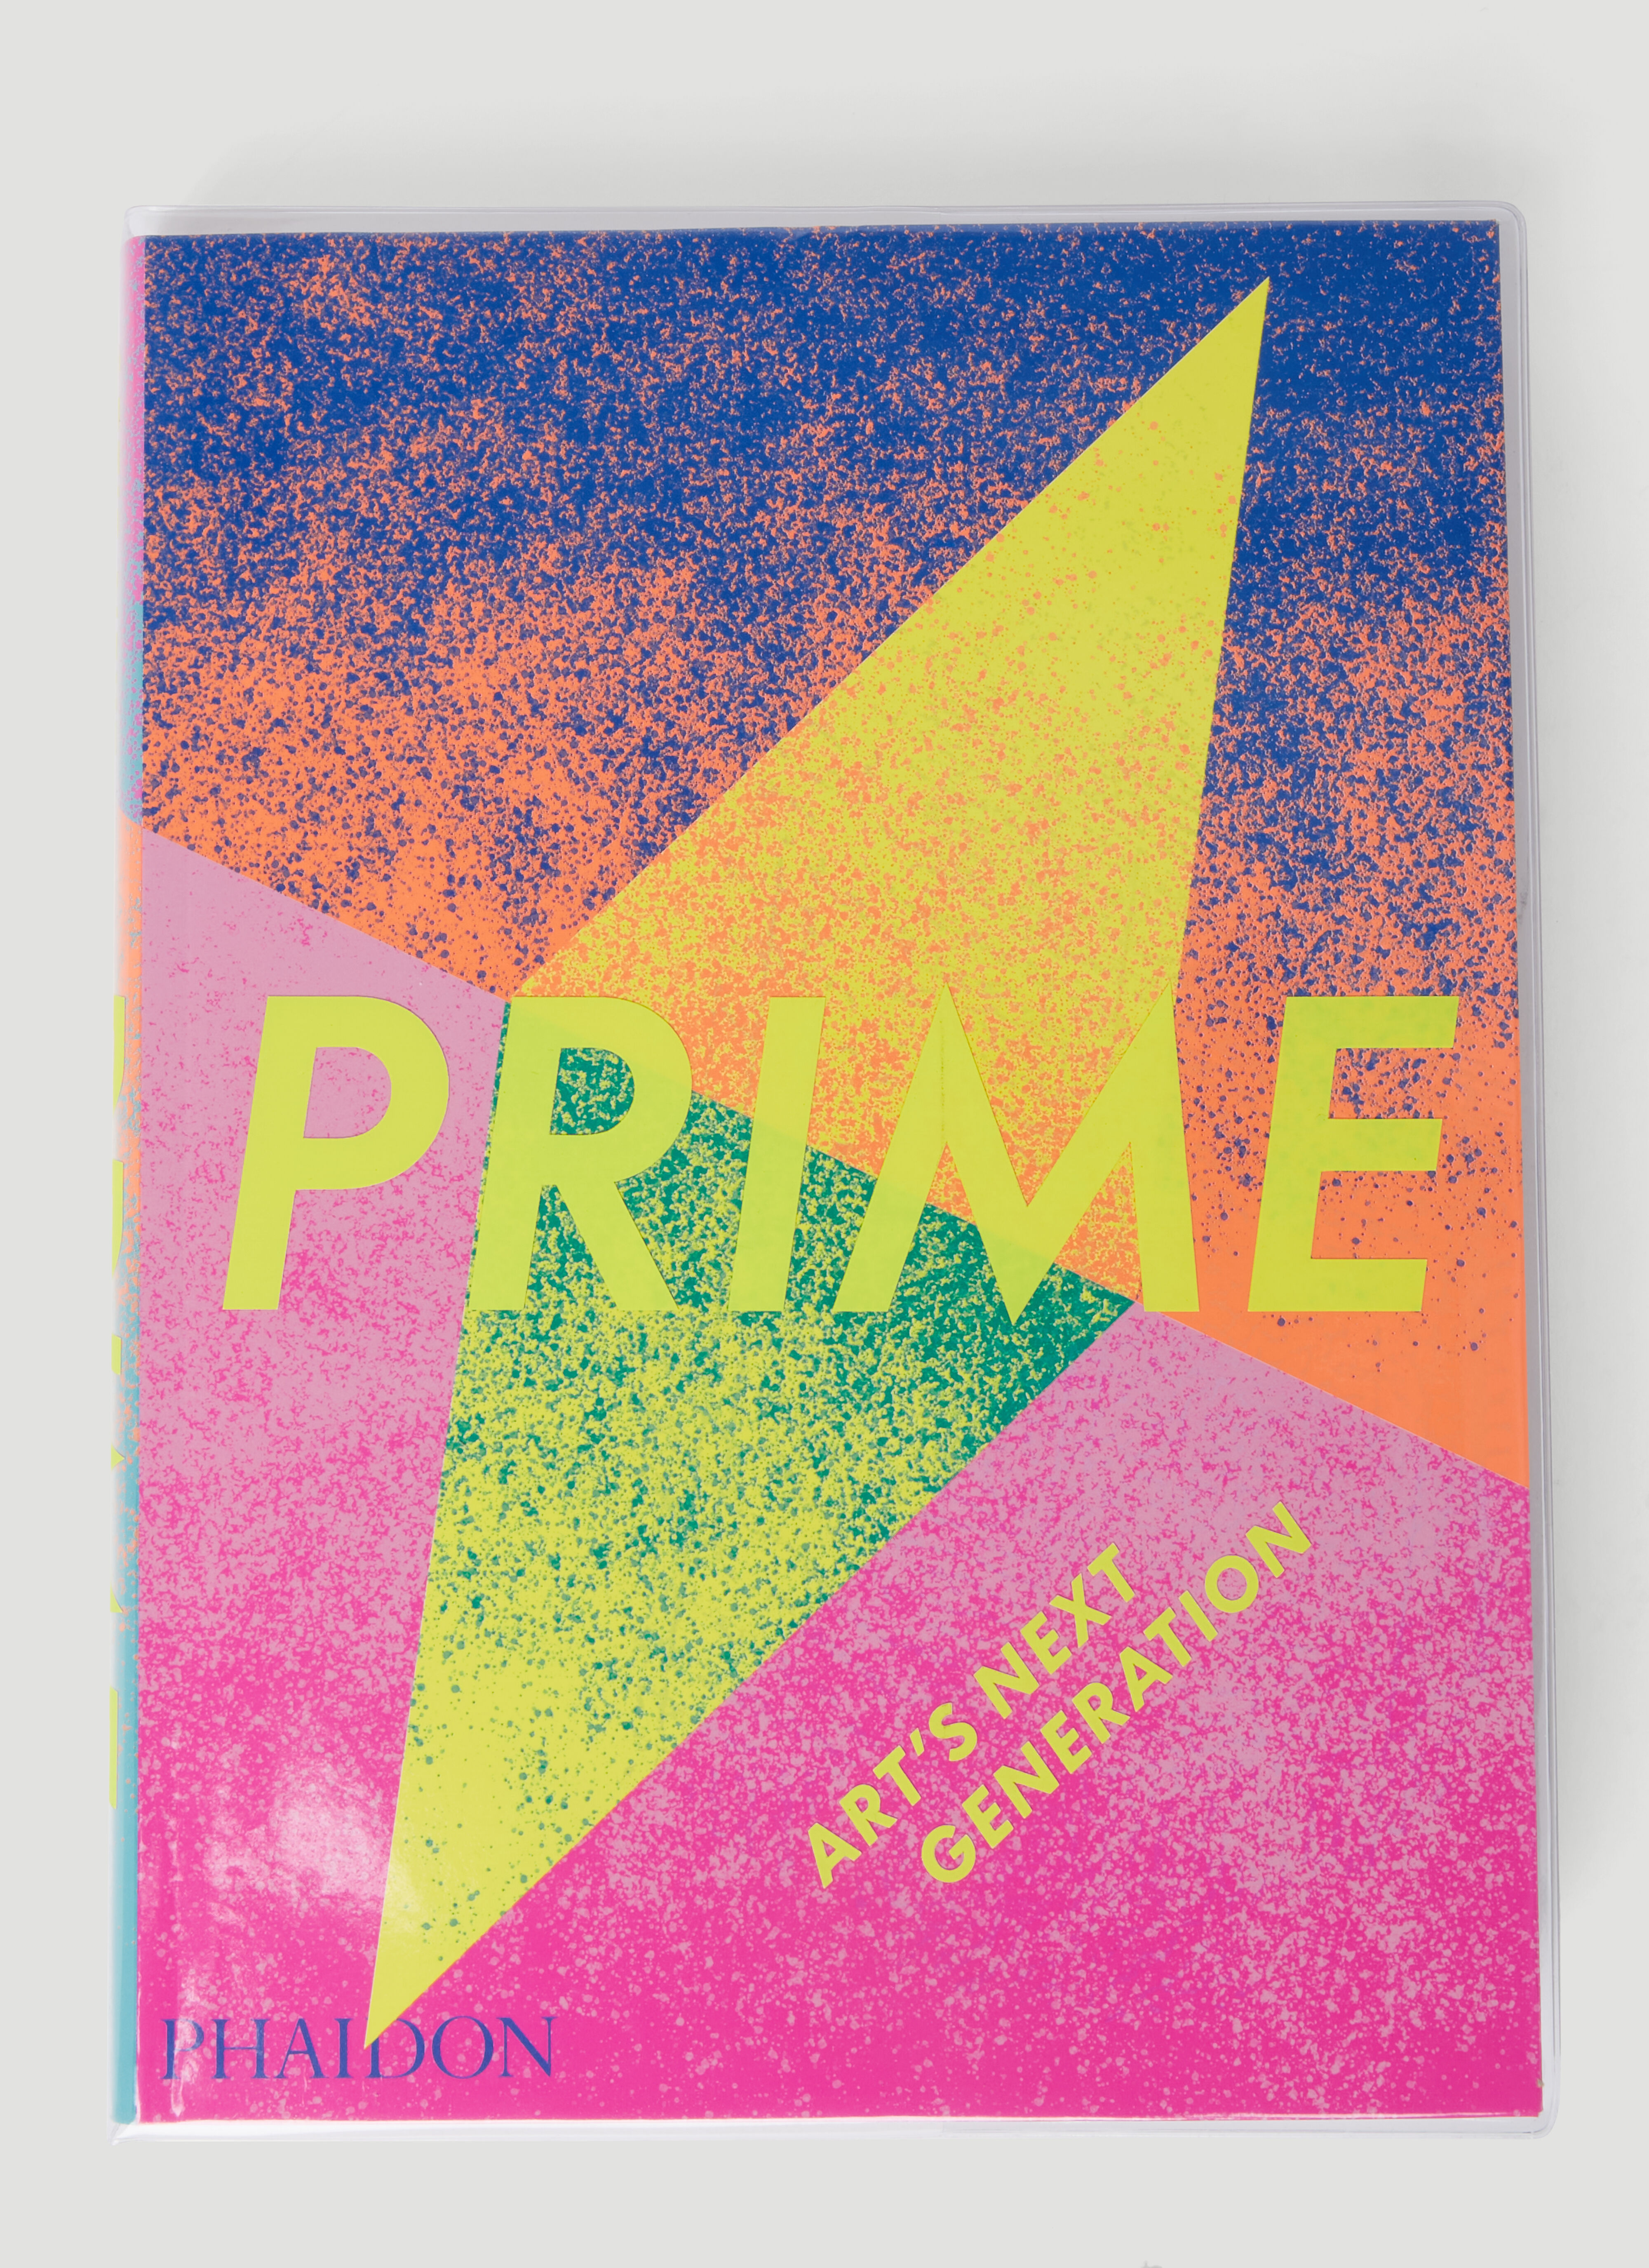 Phaidon 『プライム: アートの次世代』 ベージュ phd0553013